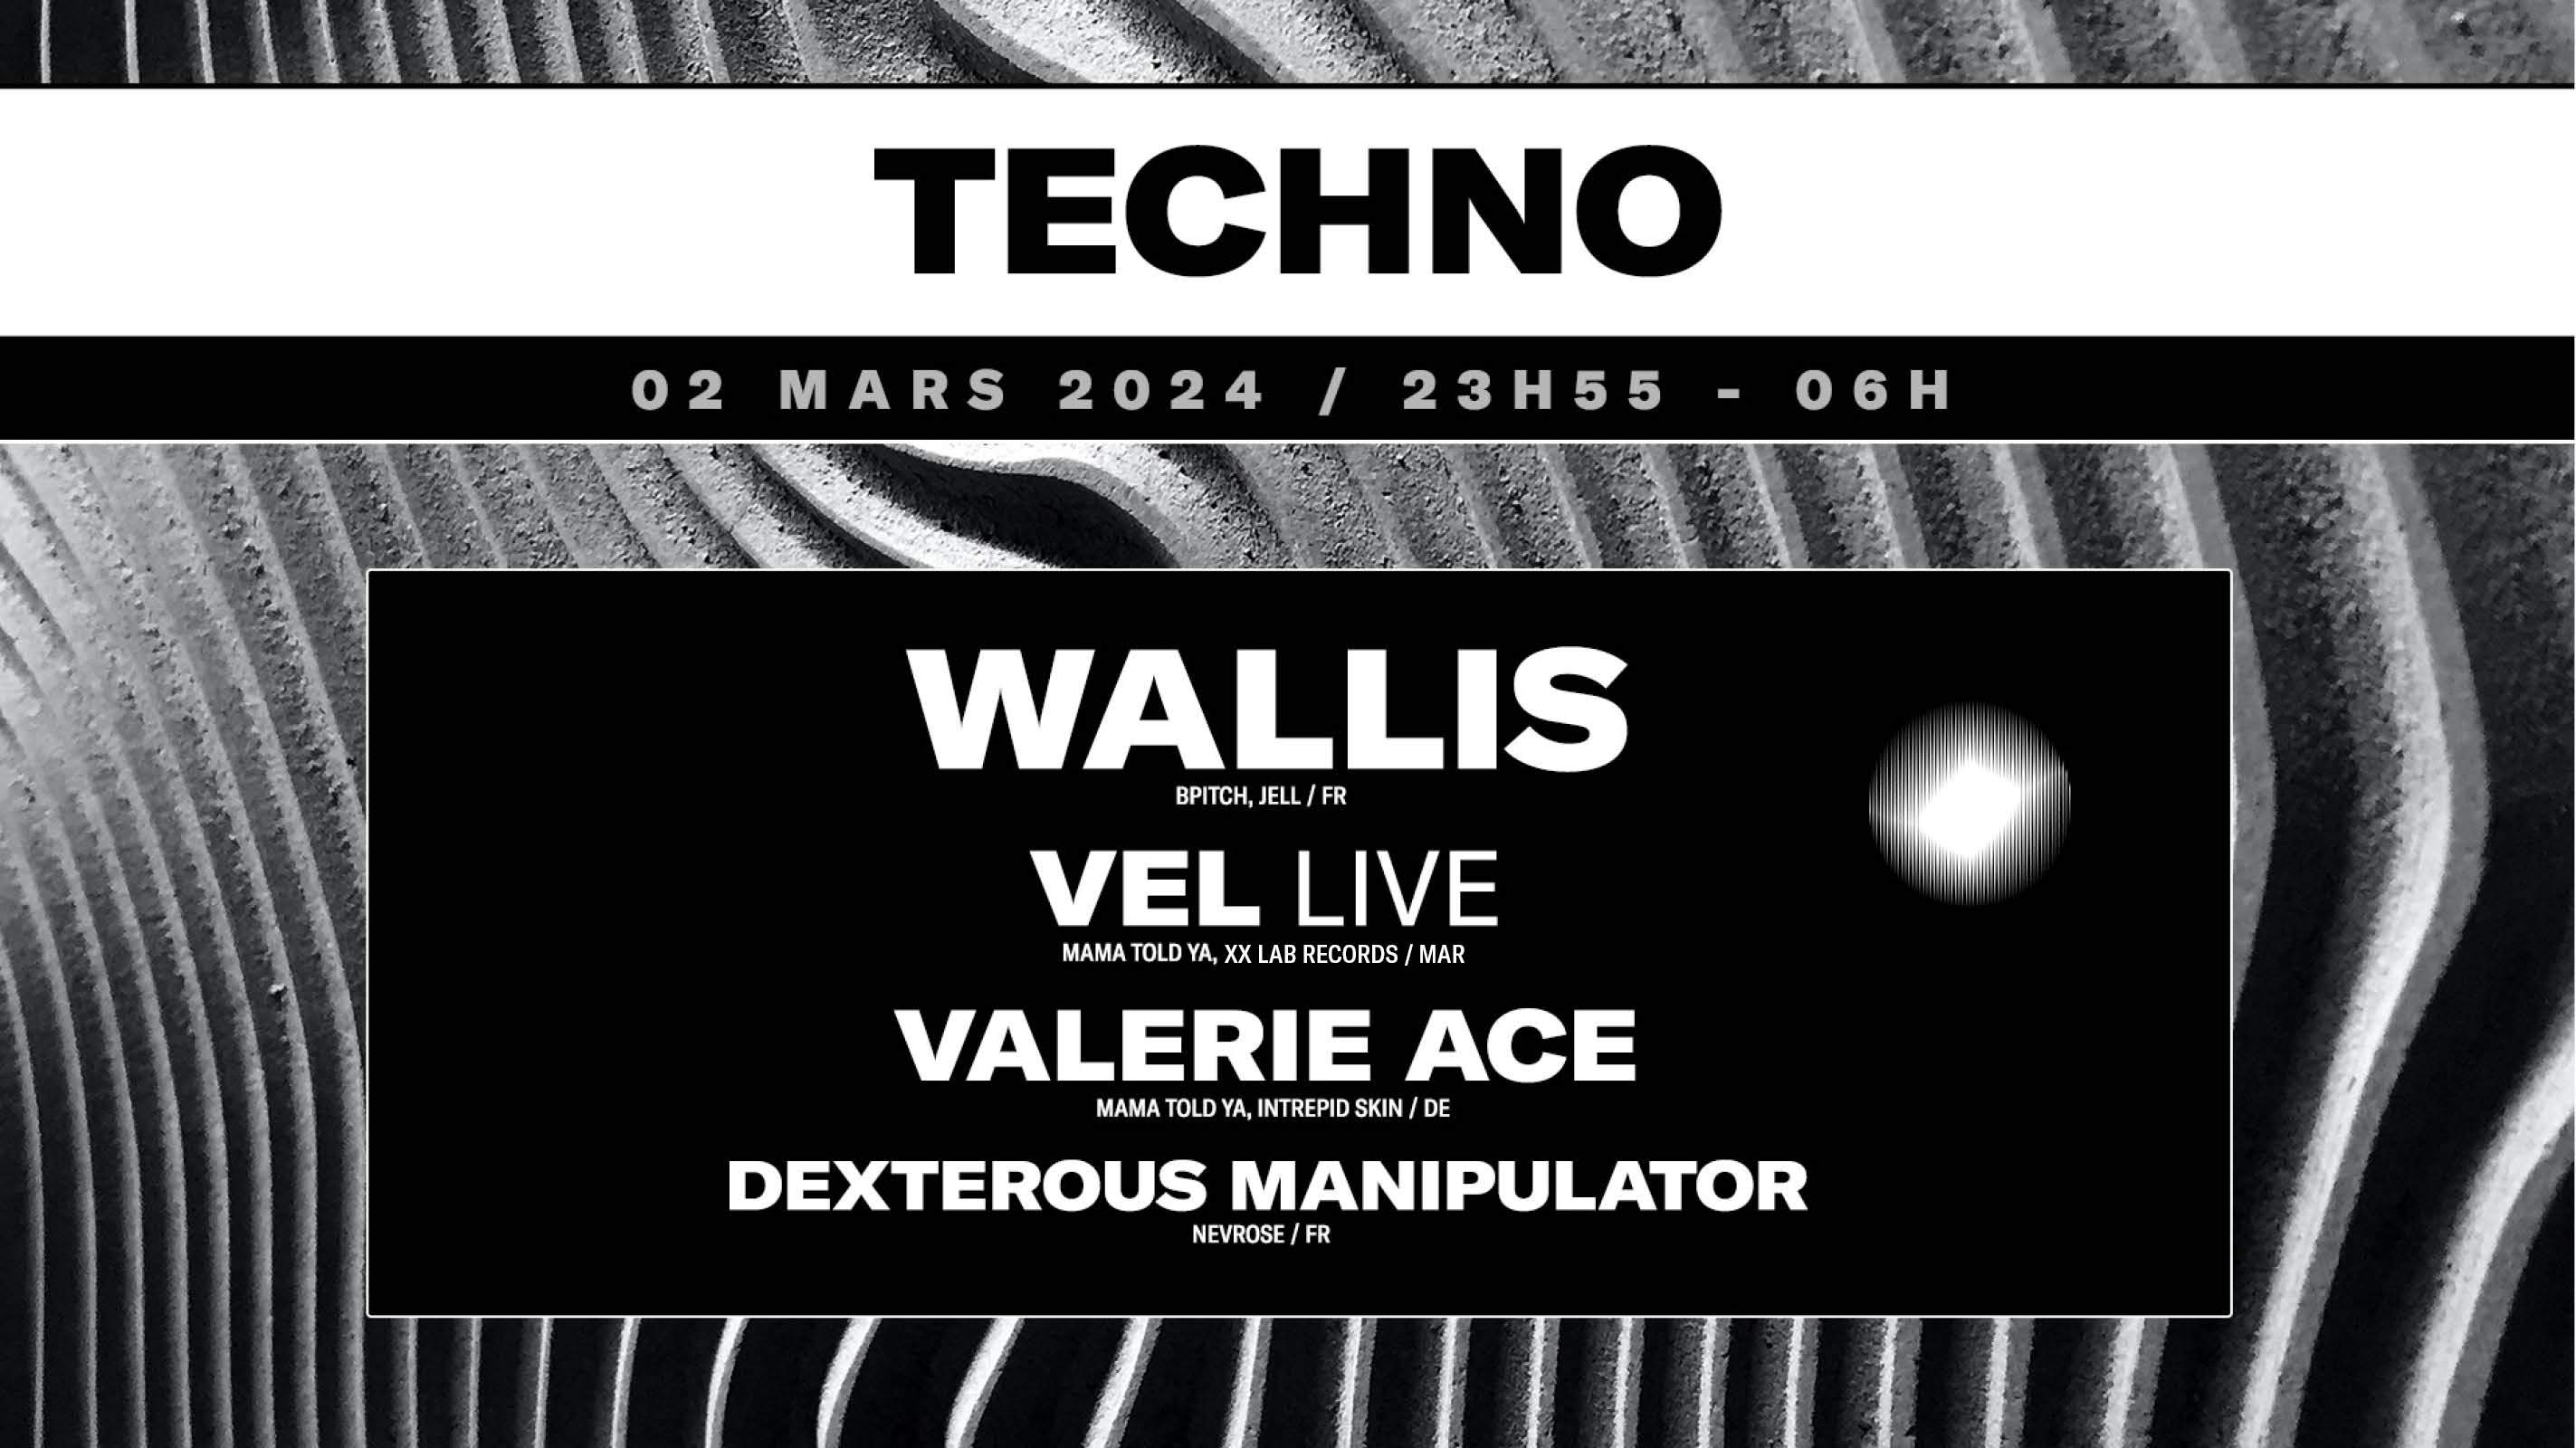 Wallis + VEL (live) + Valerie Ace + DEXTEROUS MANIPULATOR - Página frontal